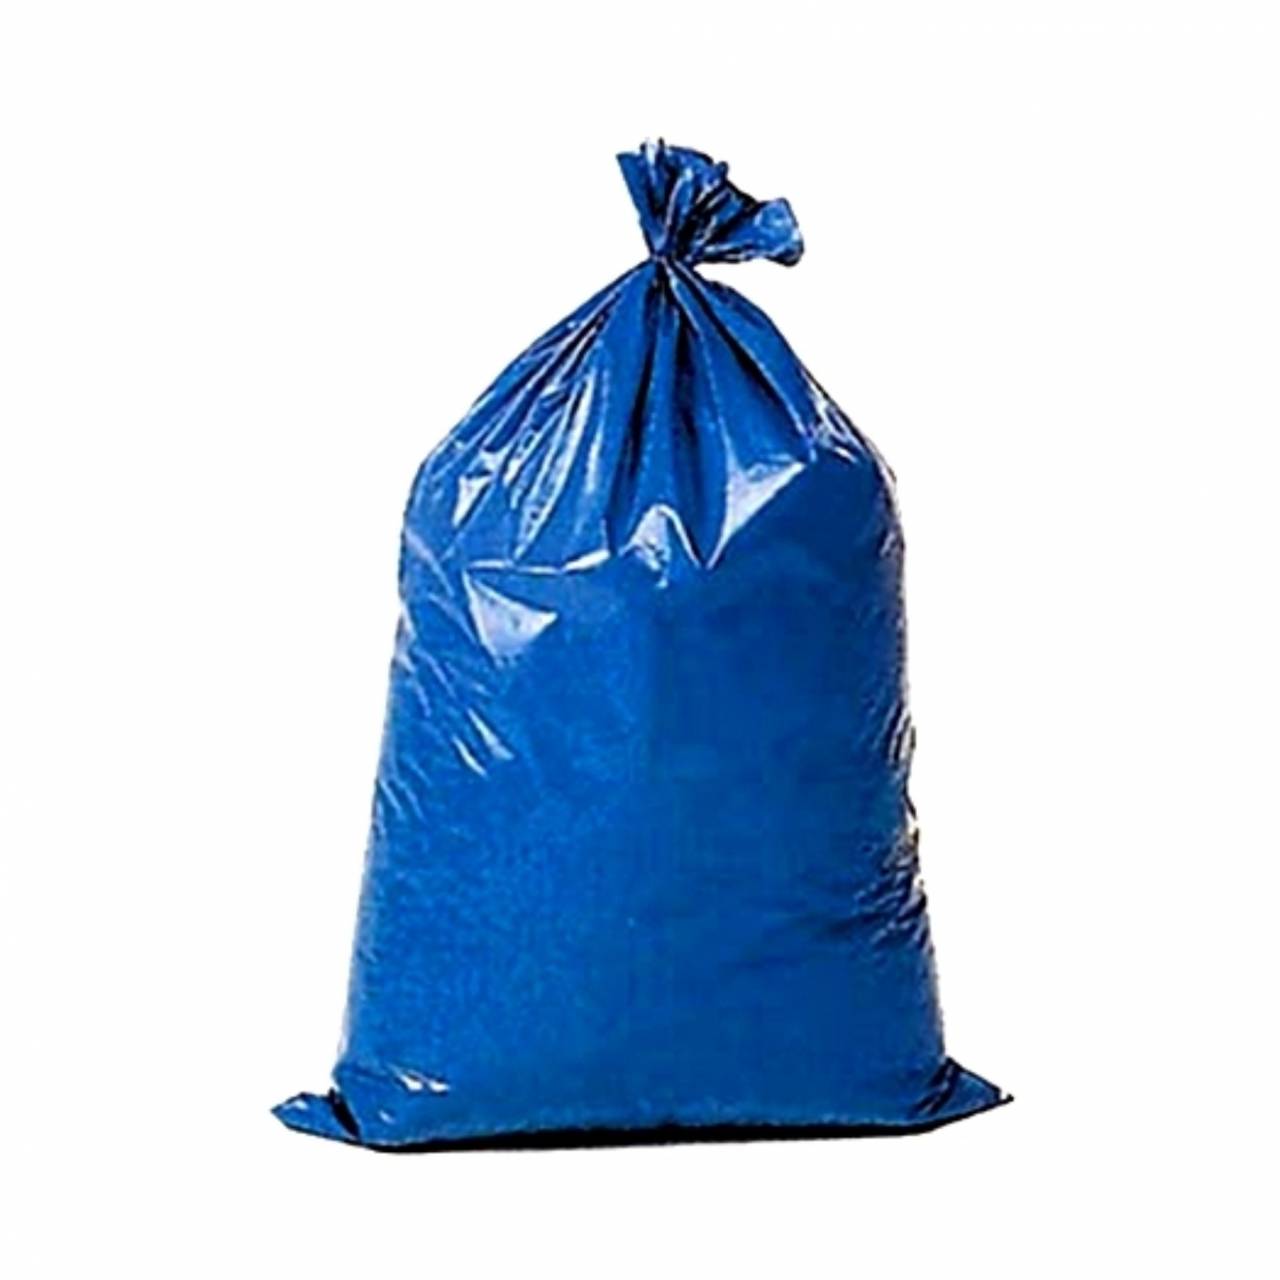 sehr stabil für schweren Abfall blau 150 Stück Abfallsack Müllsack 120 ltr 